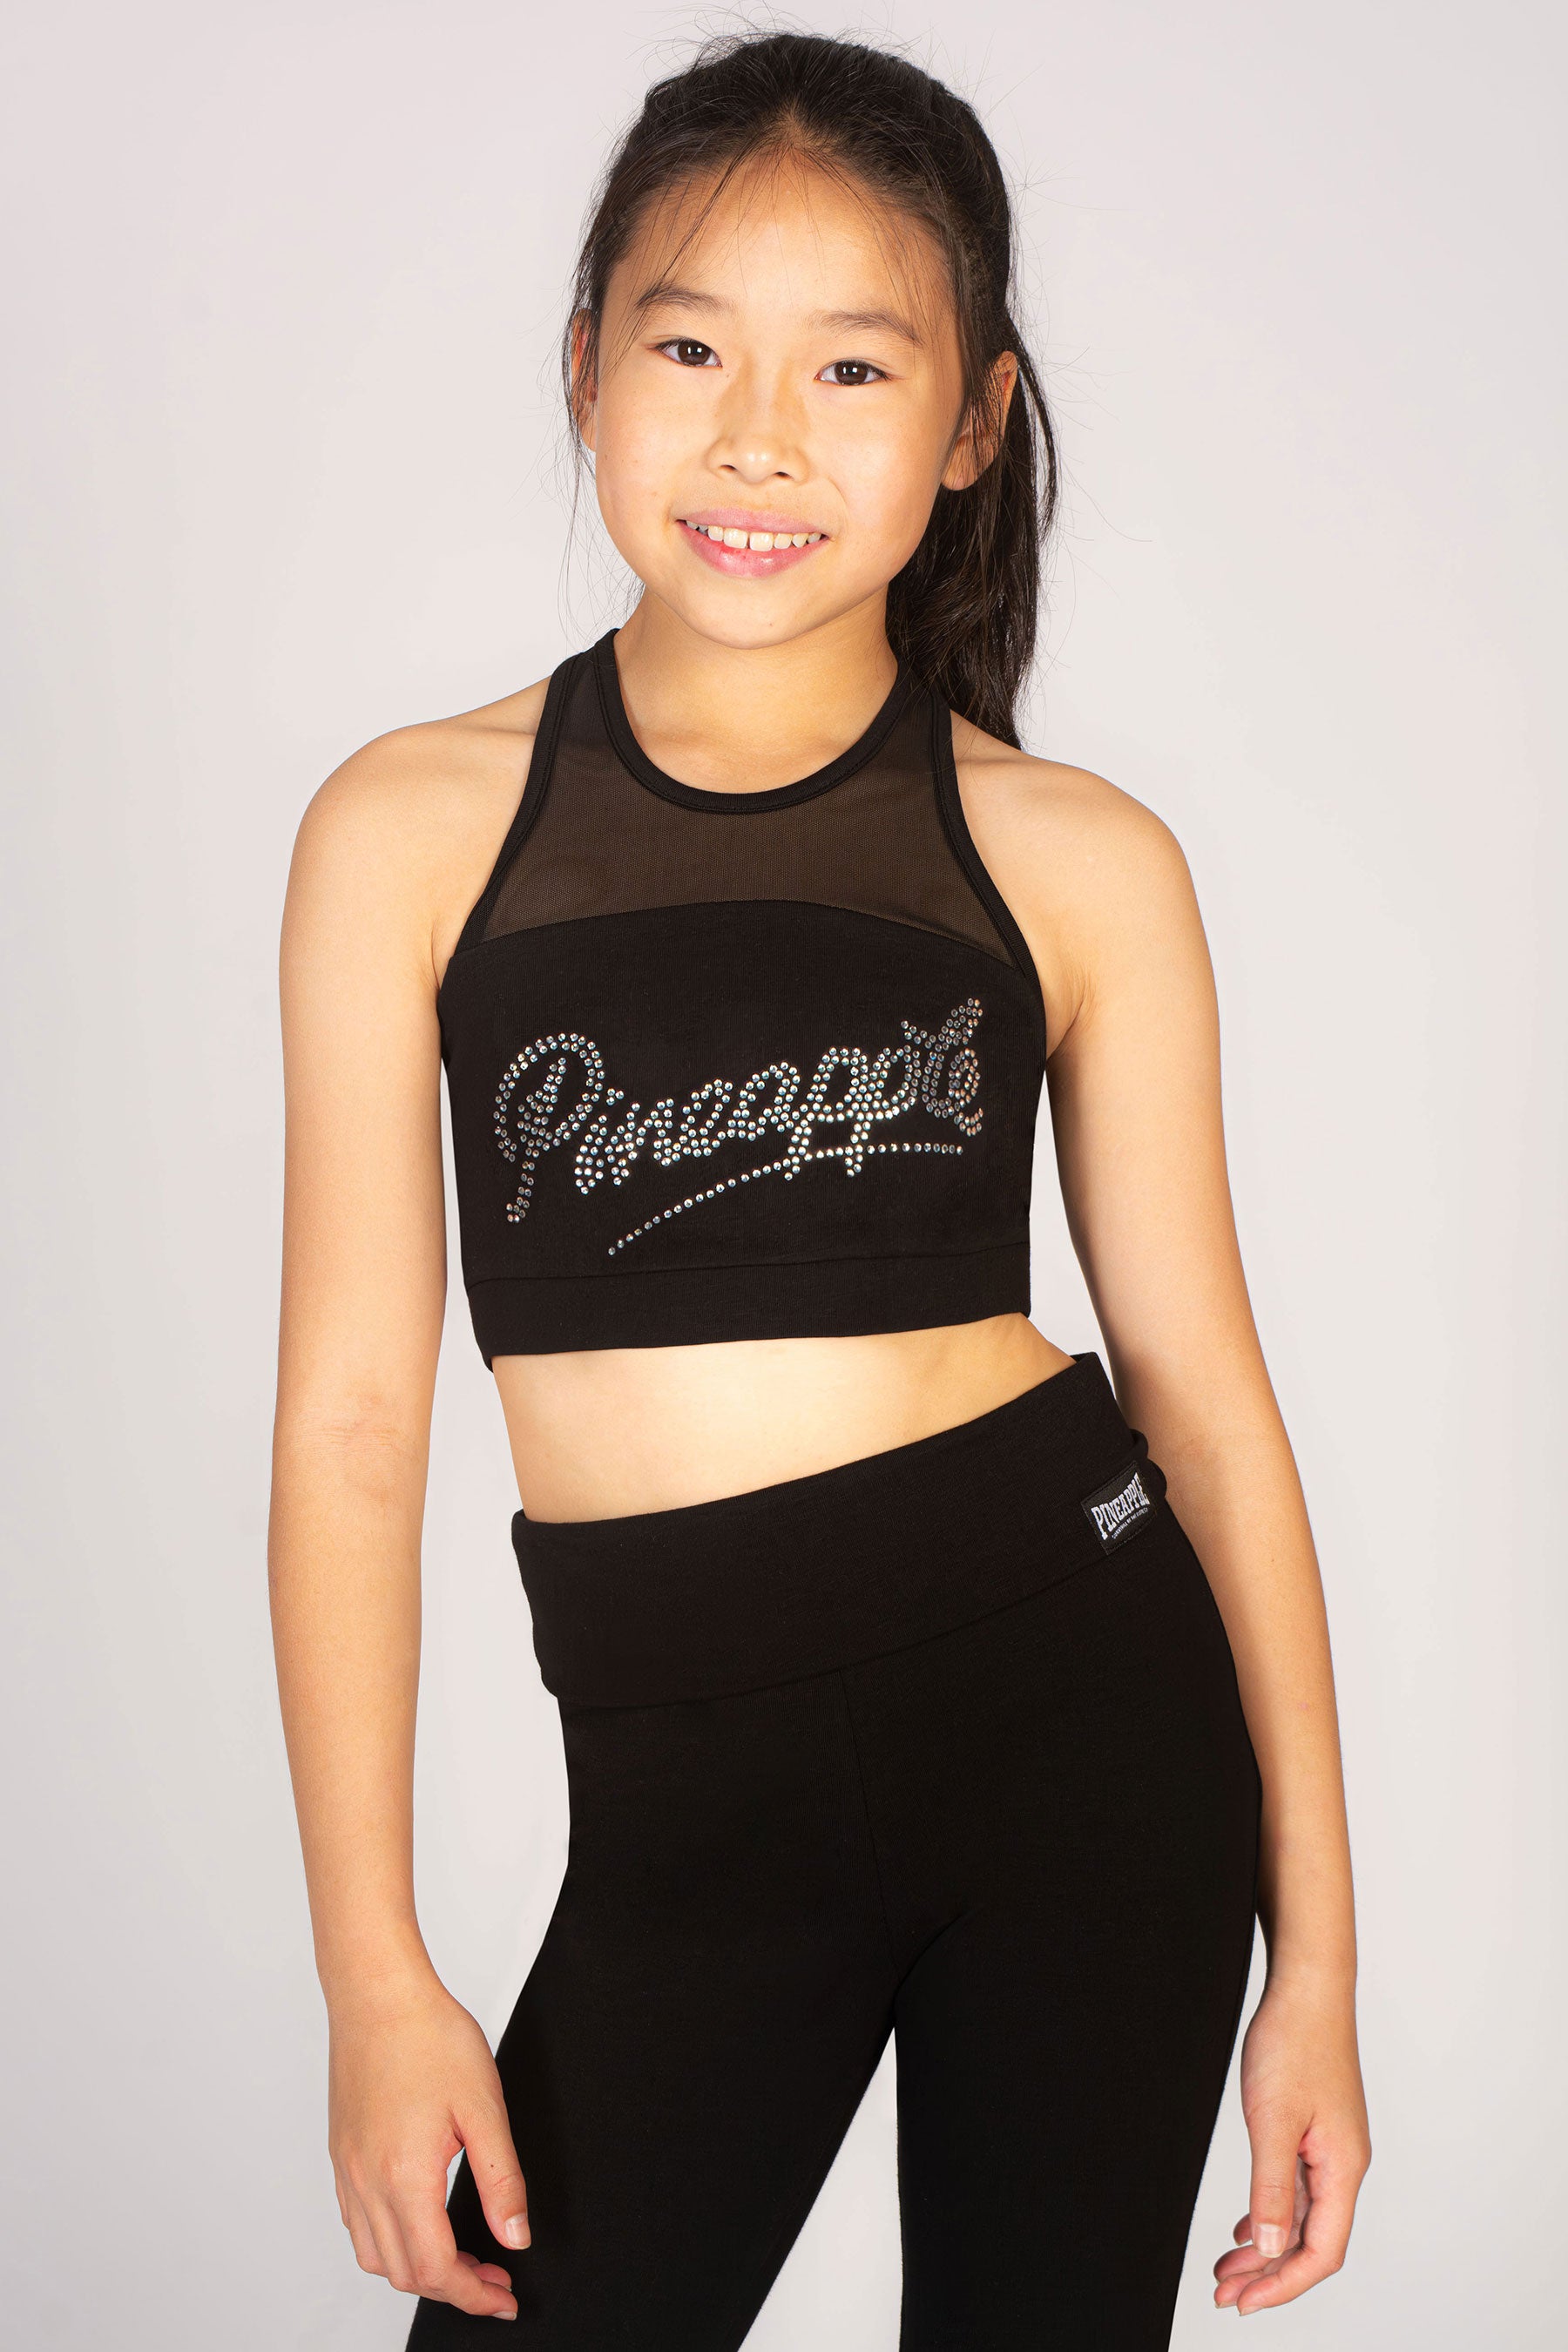 PINEAPPLE Dancewear Girls Dance Leggings with Pineapple Silver Stud Logo  Black - Age 5-6 years